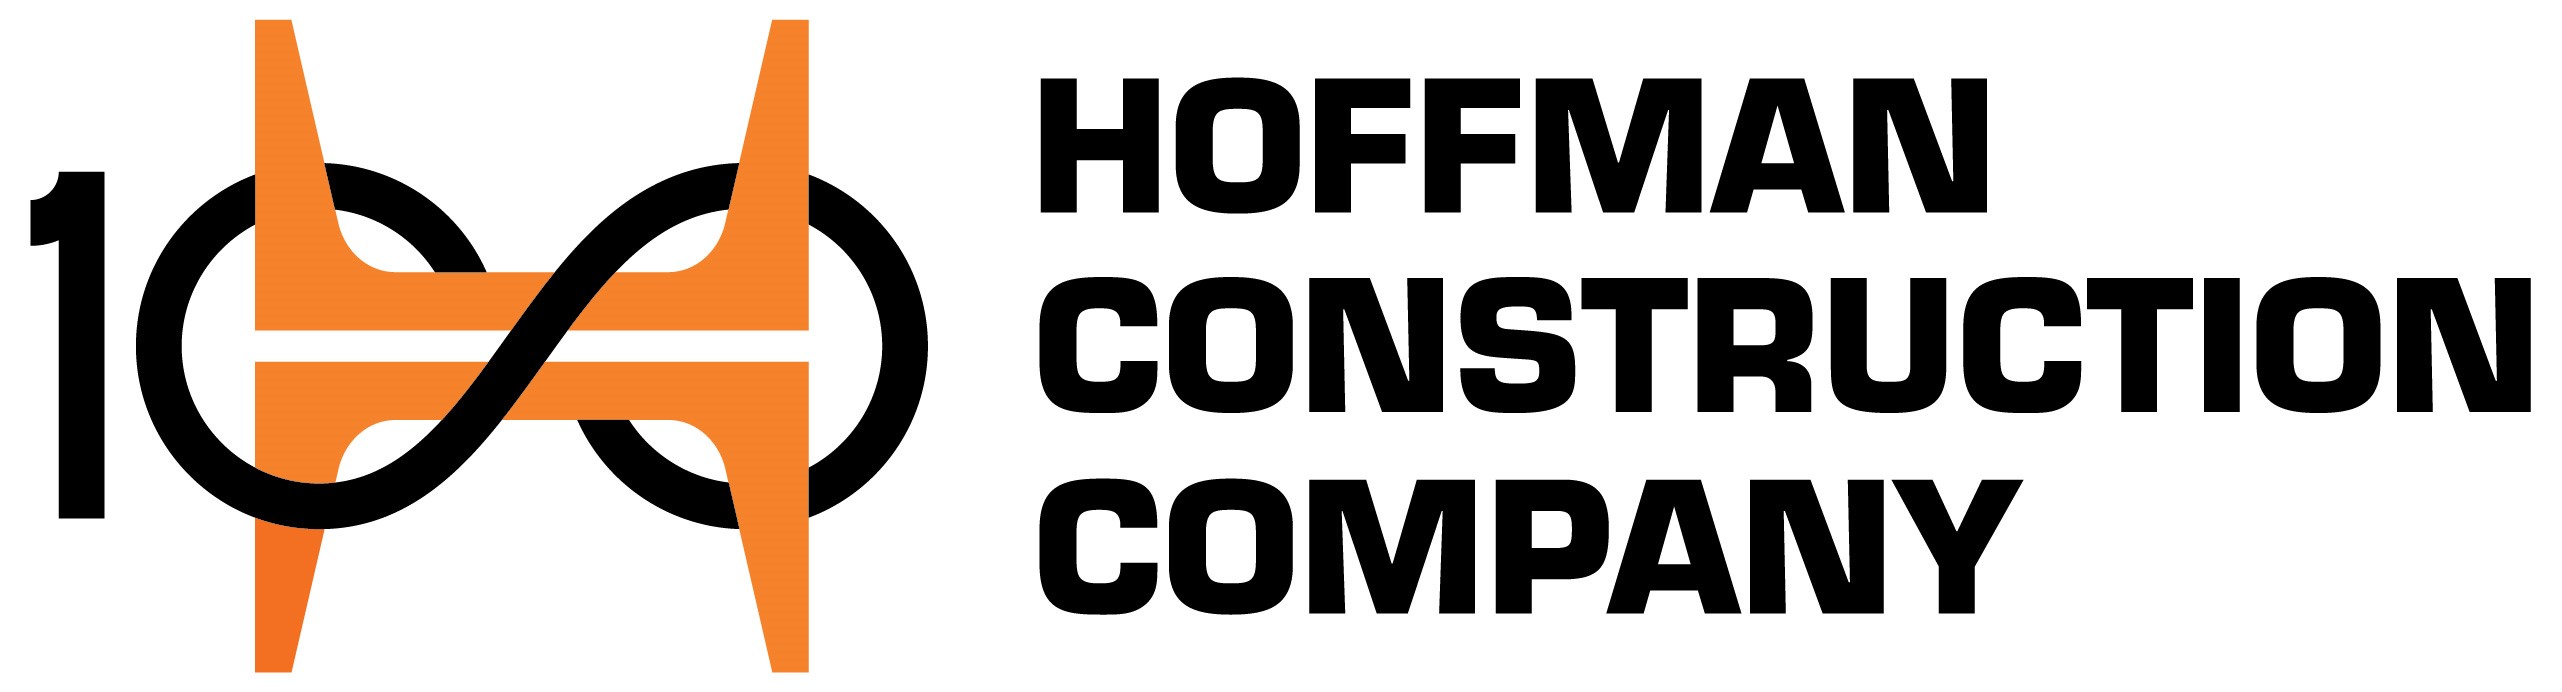 Hoffman Construction Company logo